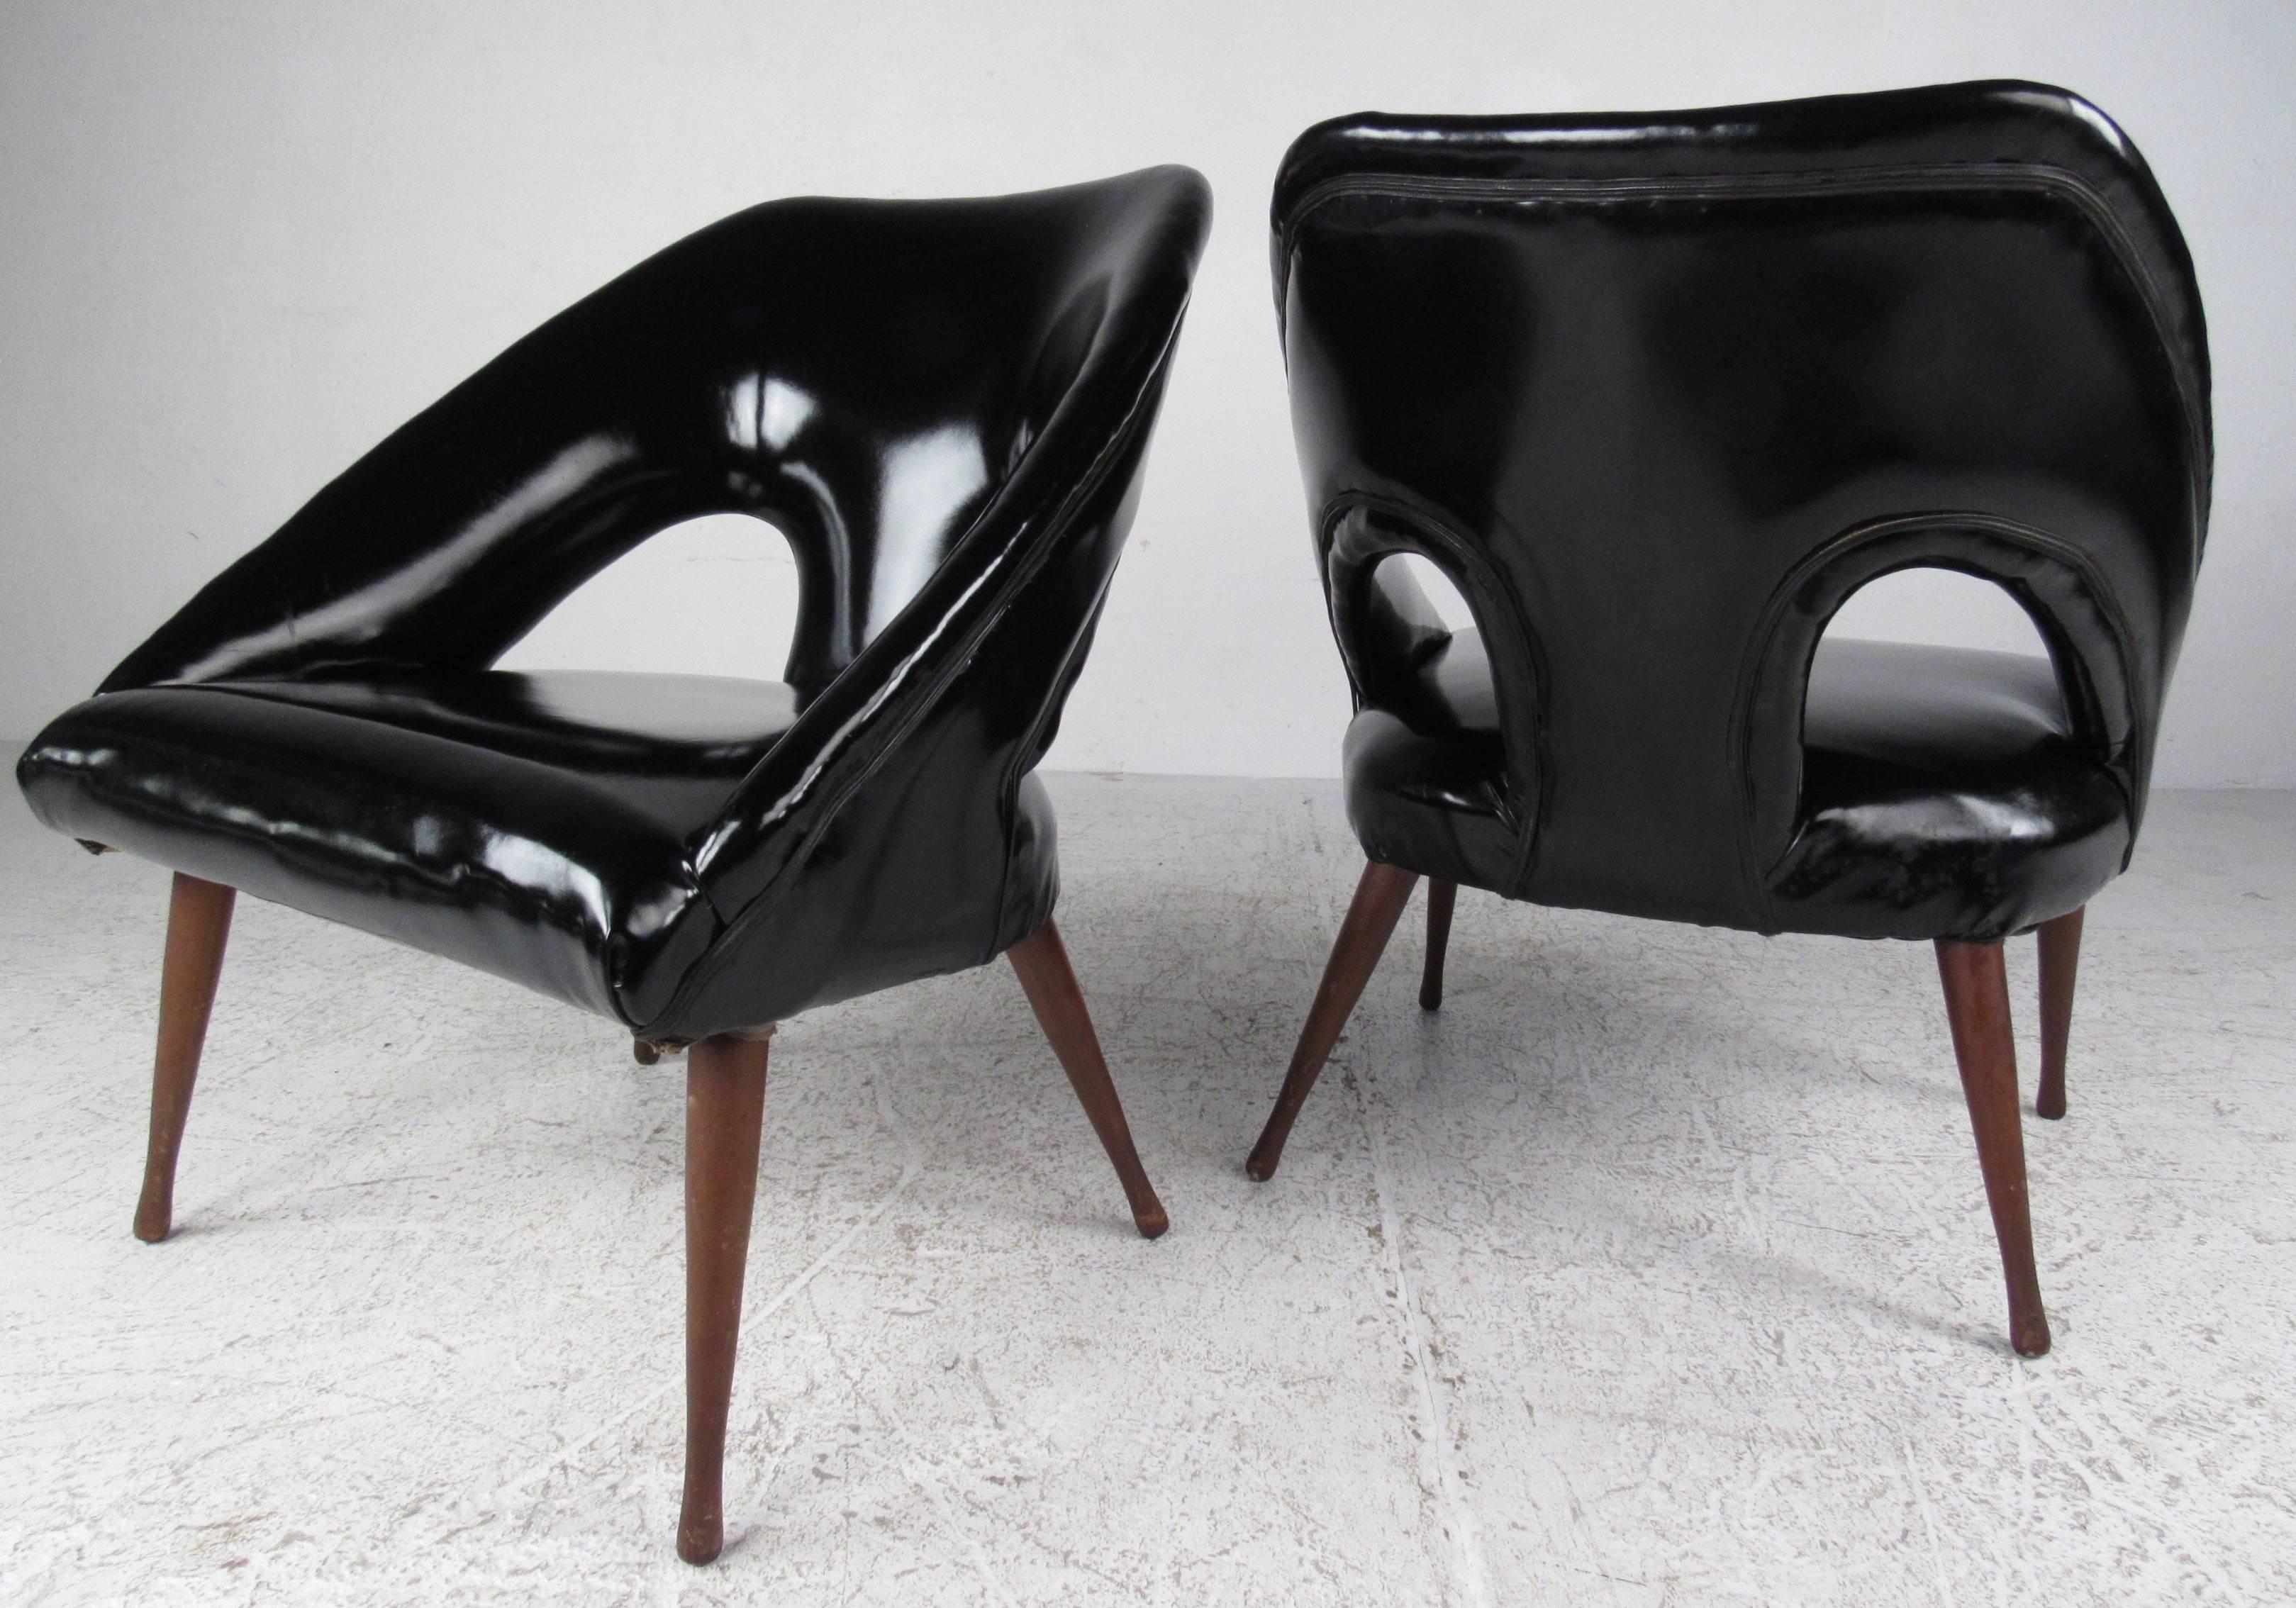 black vinyl chairs